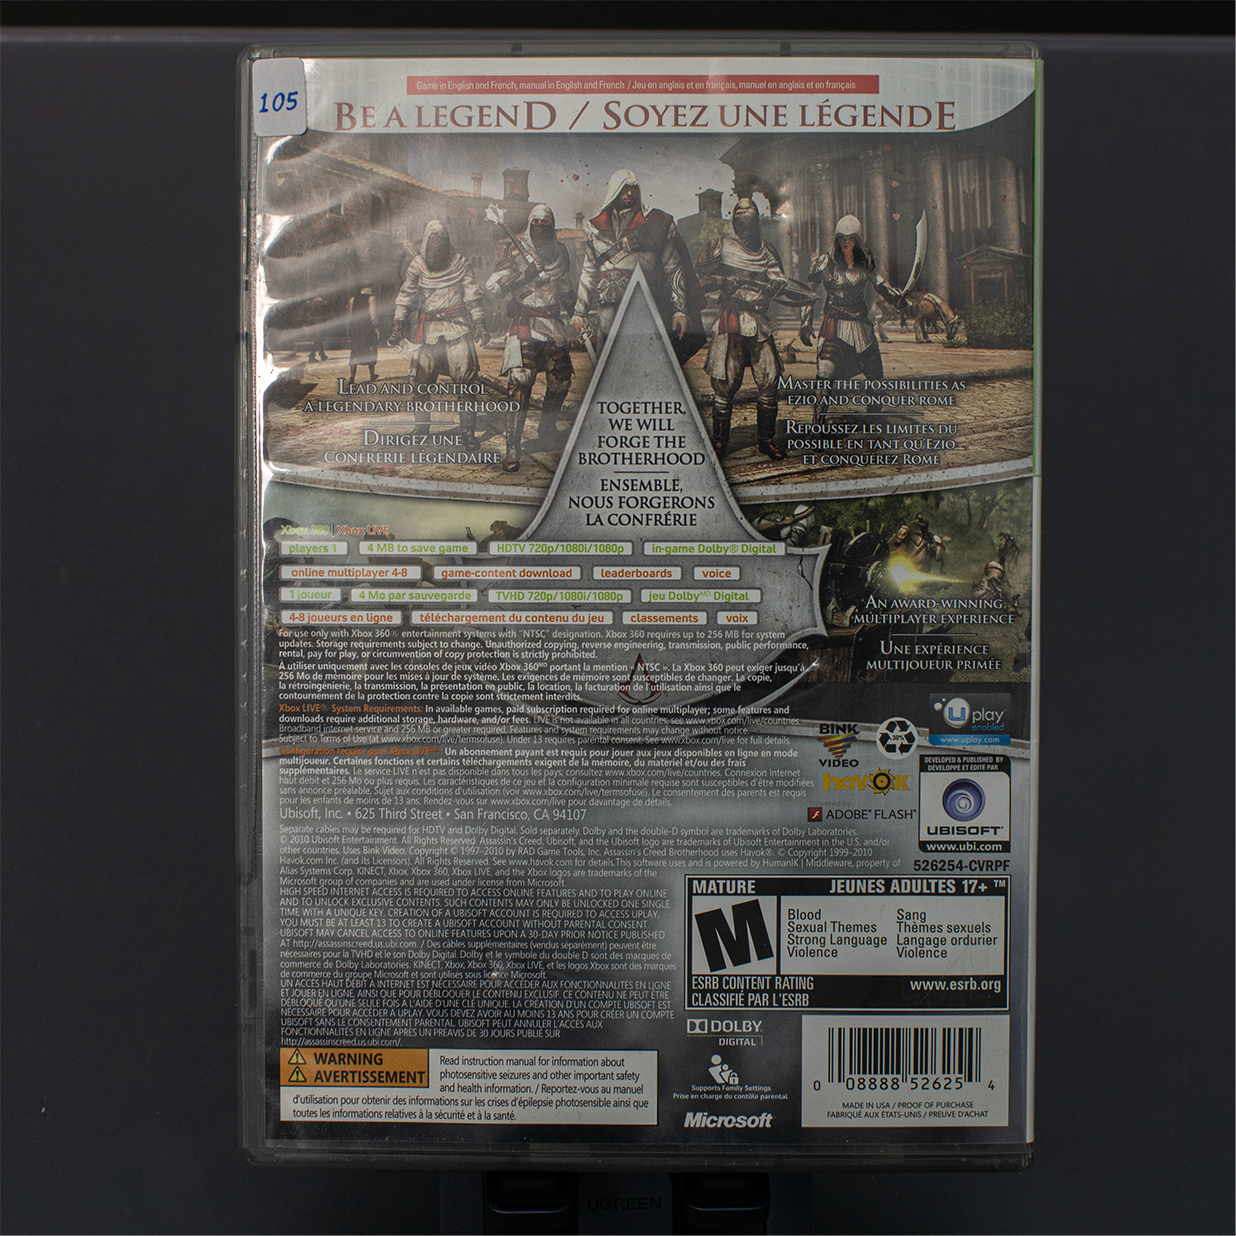 Assassin's Creed Brotherhood - Xbox 360 Game